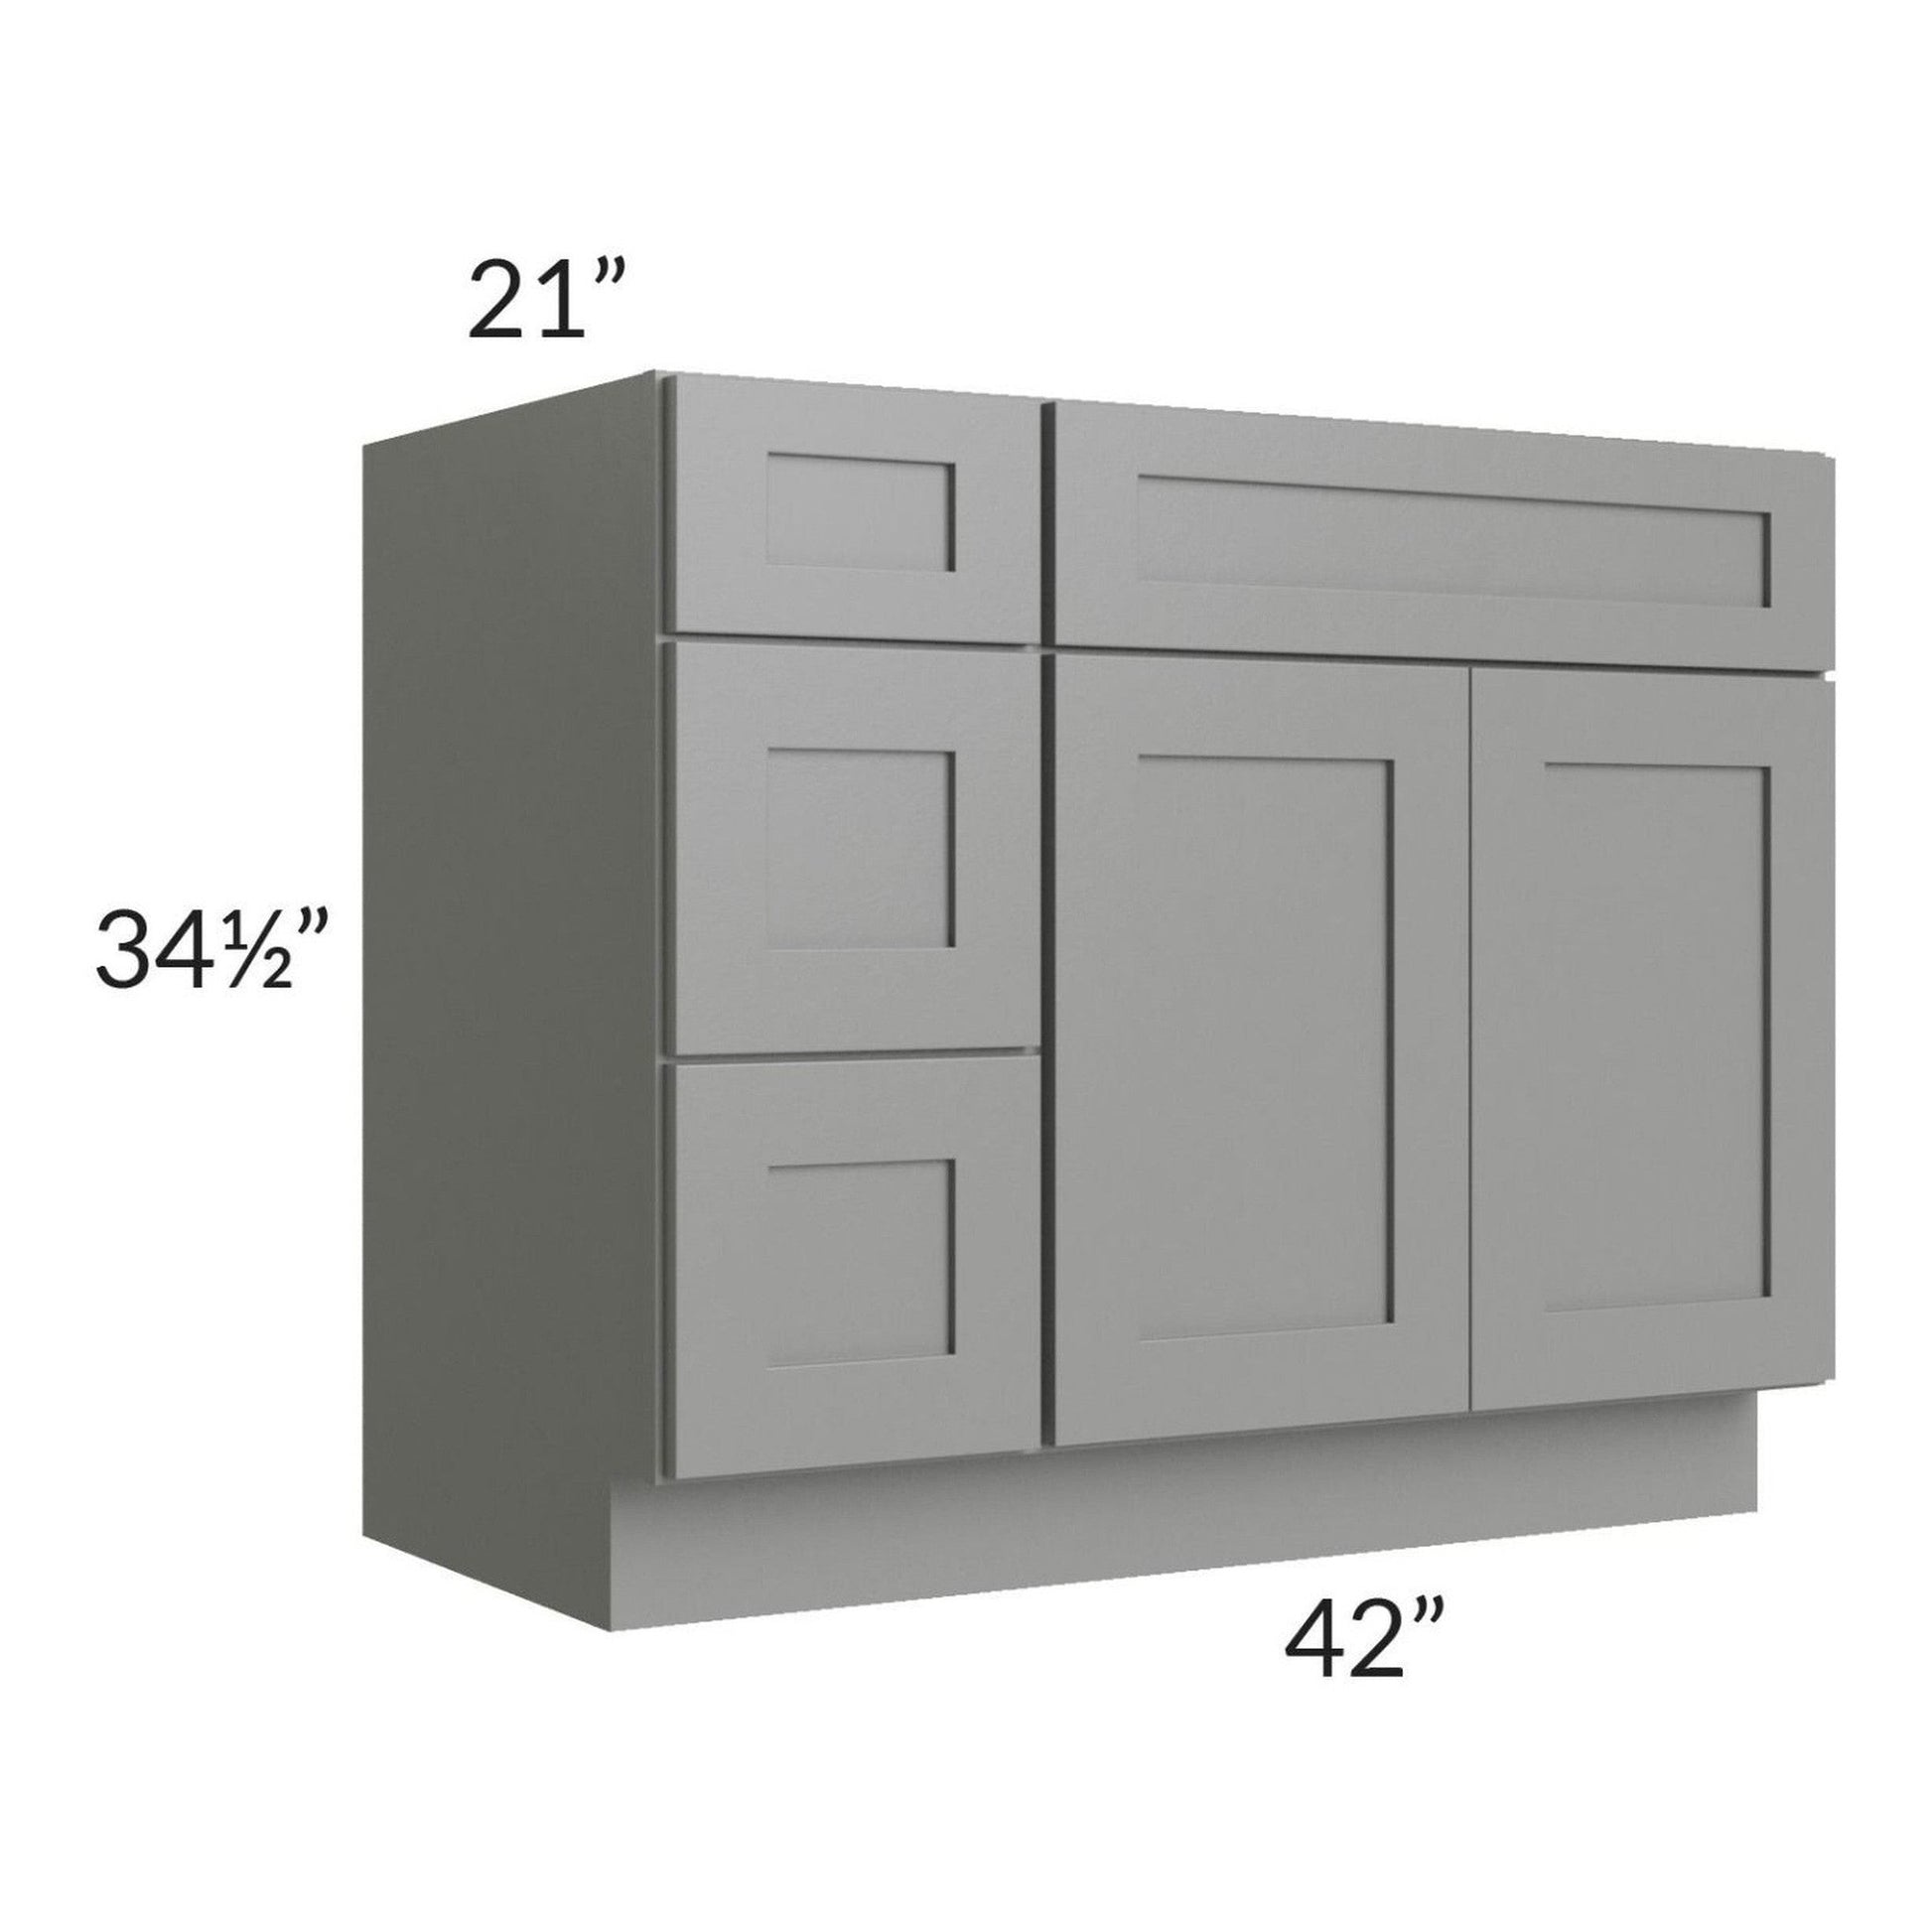 RTA Shale Grey Shaker 42" Vanity Sink Base Cabinet (Drawers on Left) with 2 Decorative End Panels